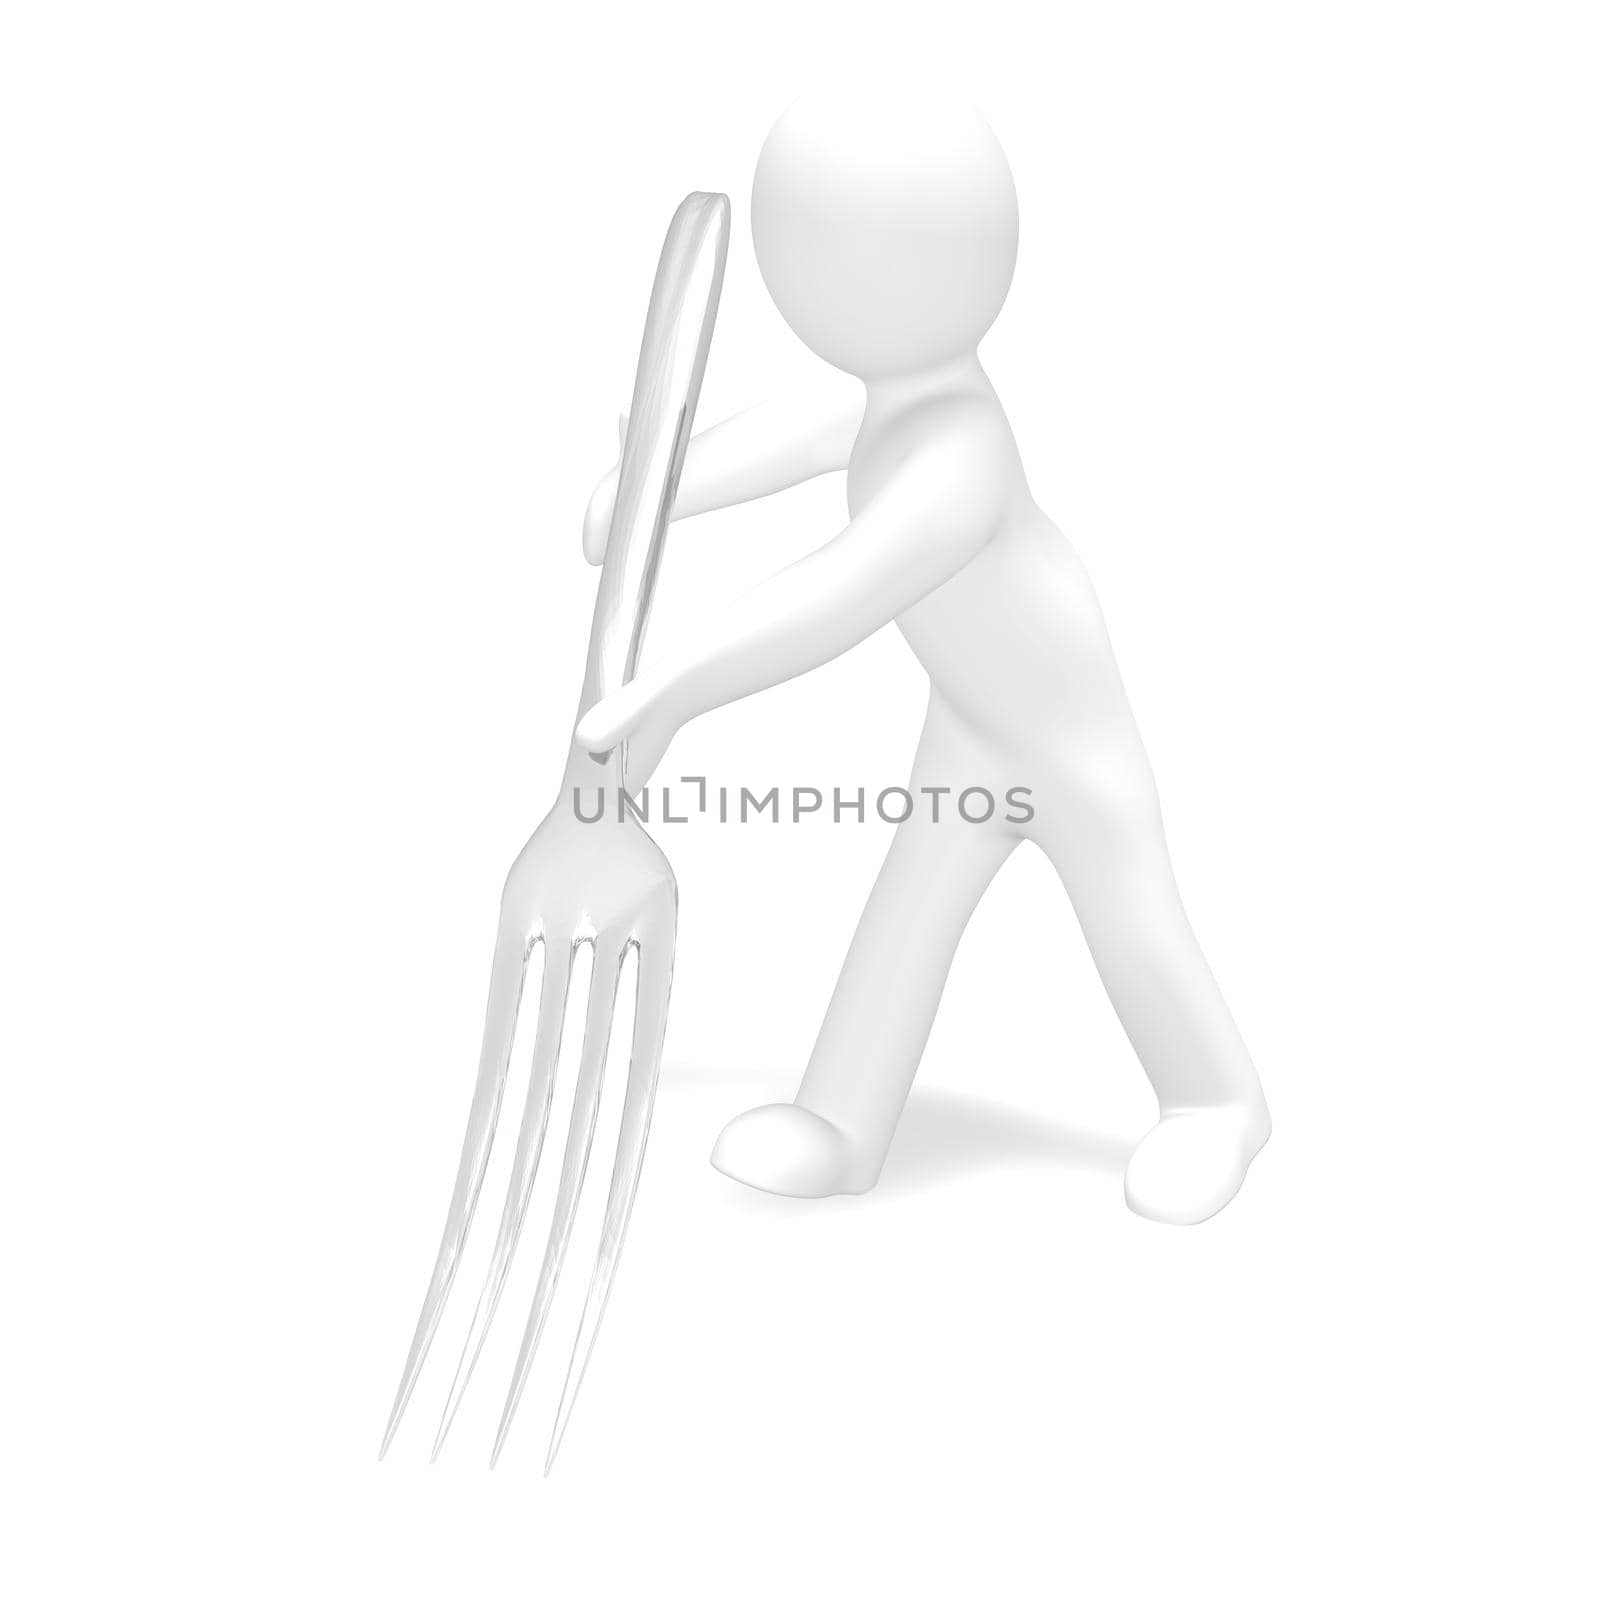 Little man holds a huge fork by BEMPhoto